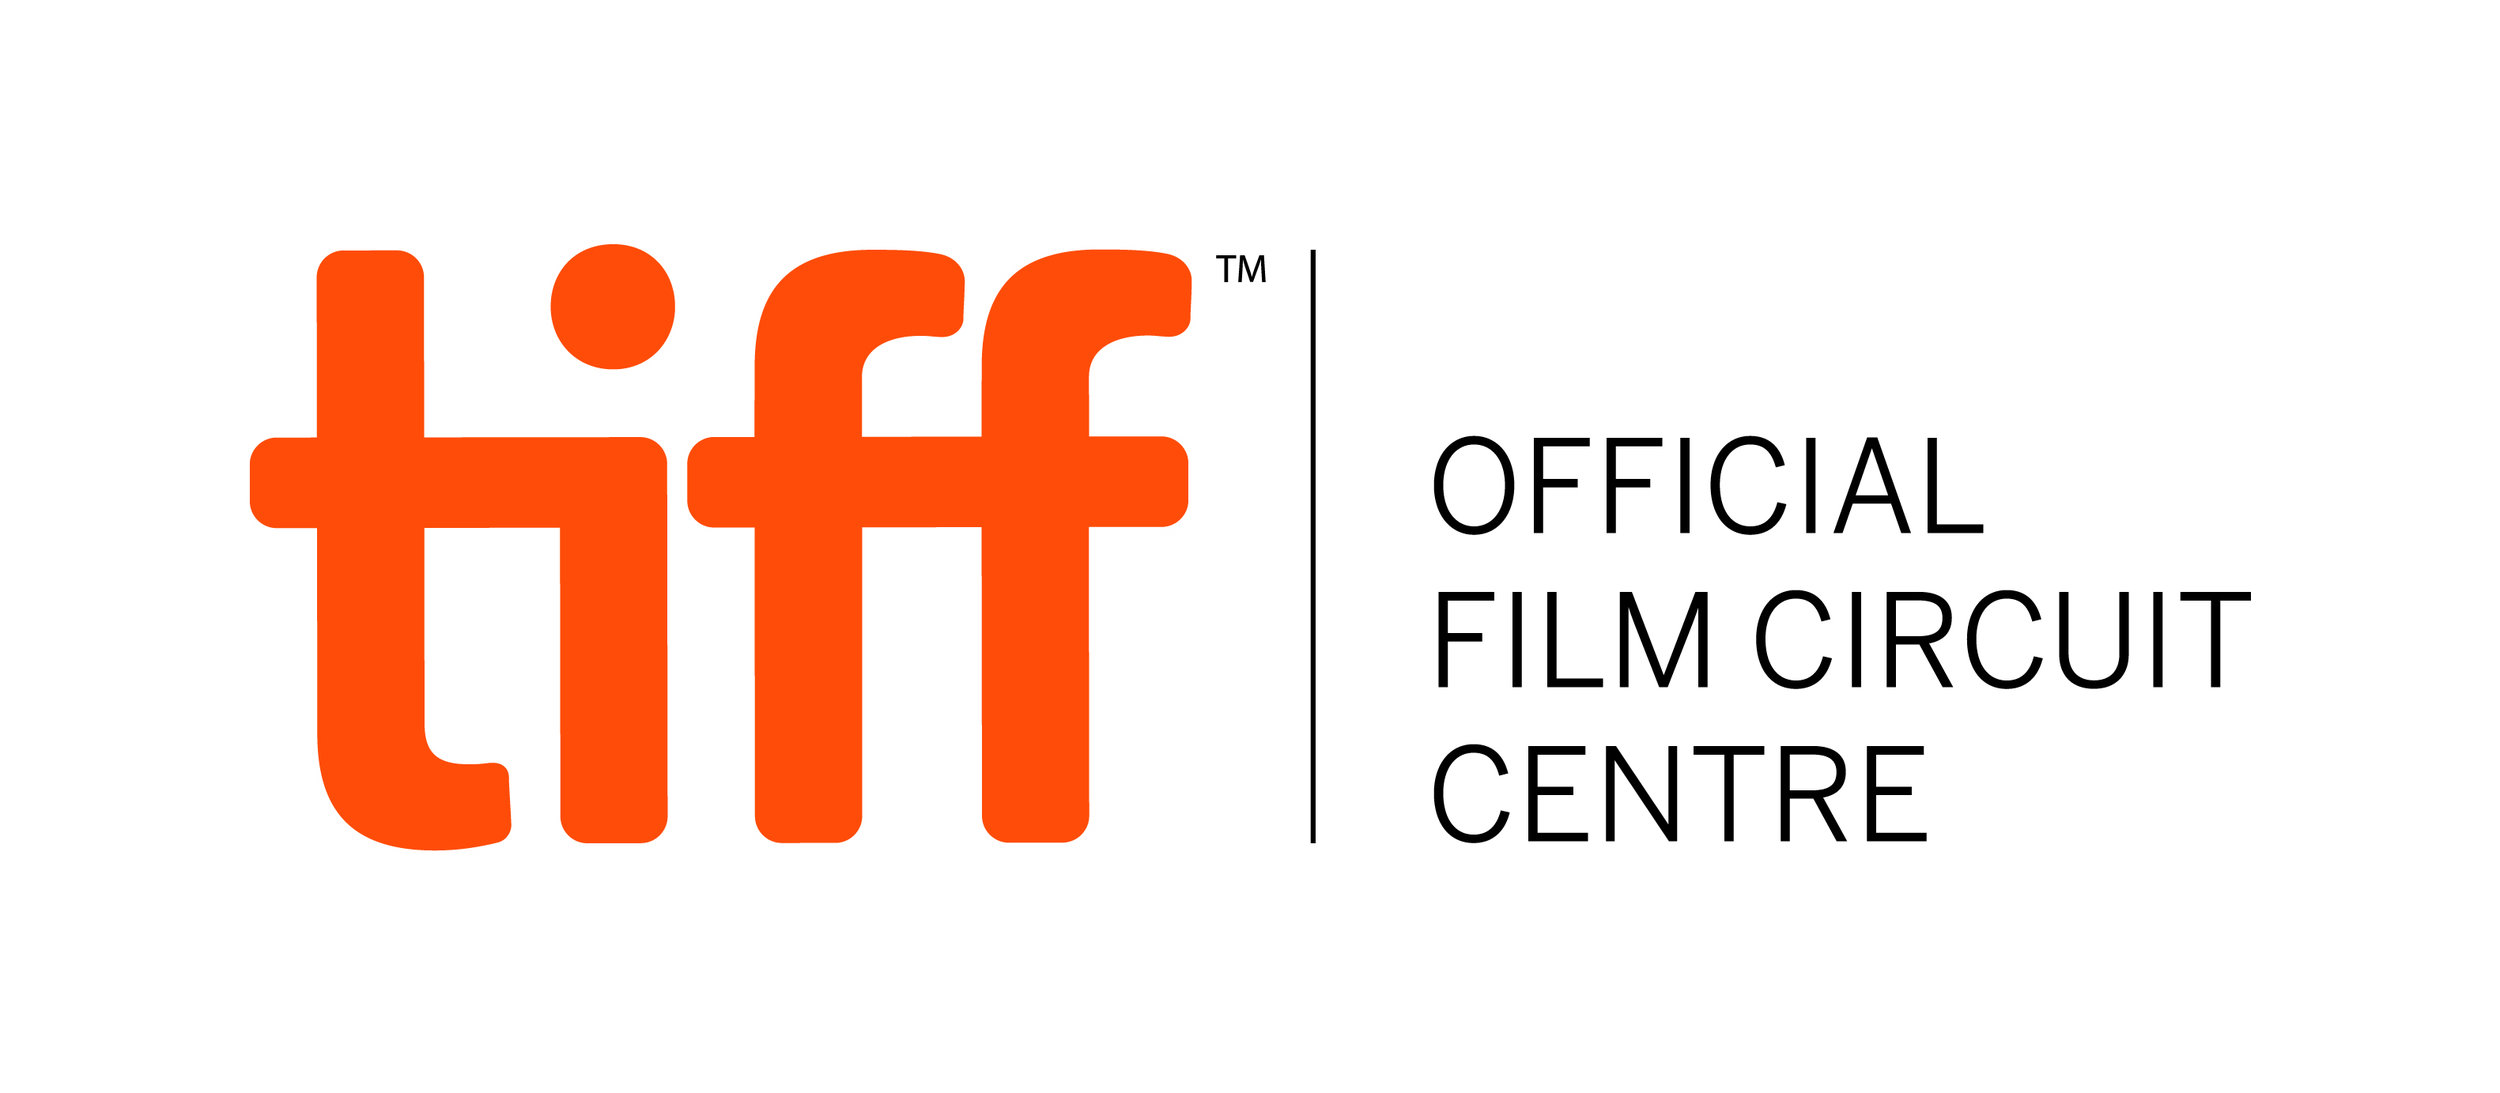 Toronto International Film Festival Official Film Circuit entre logo.